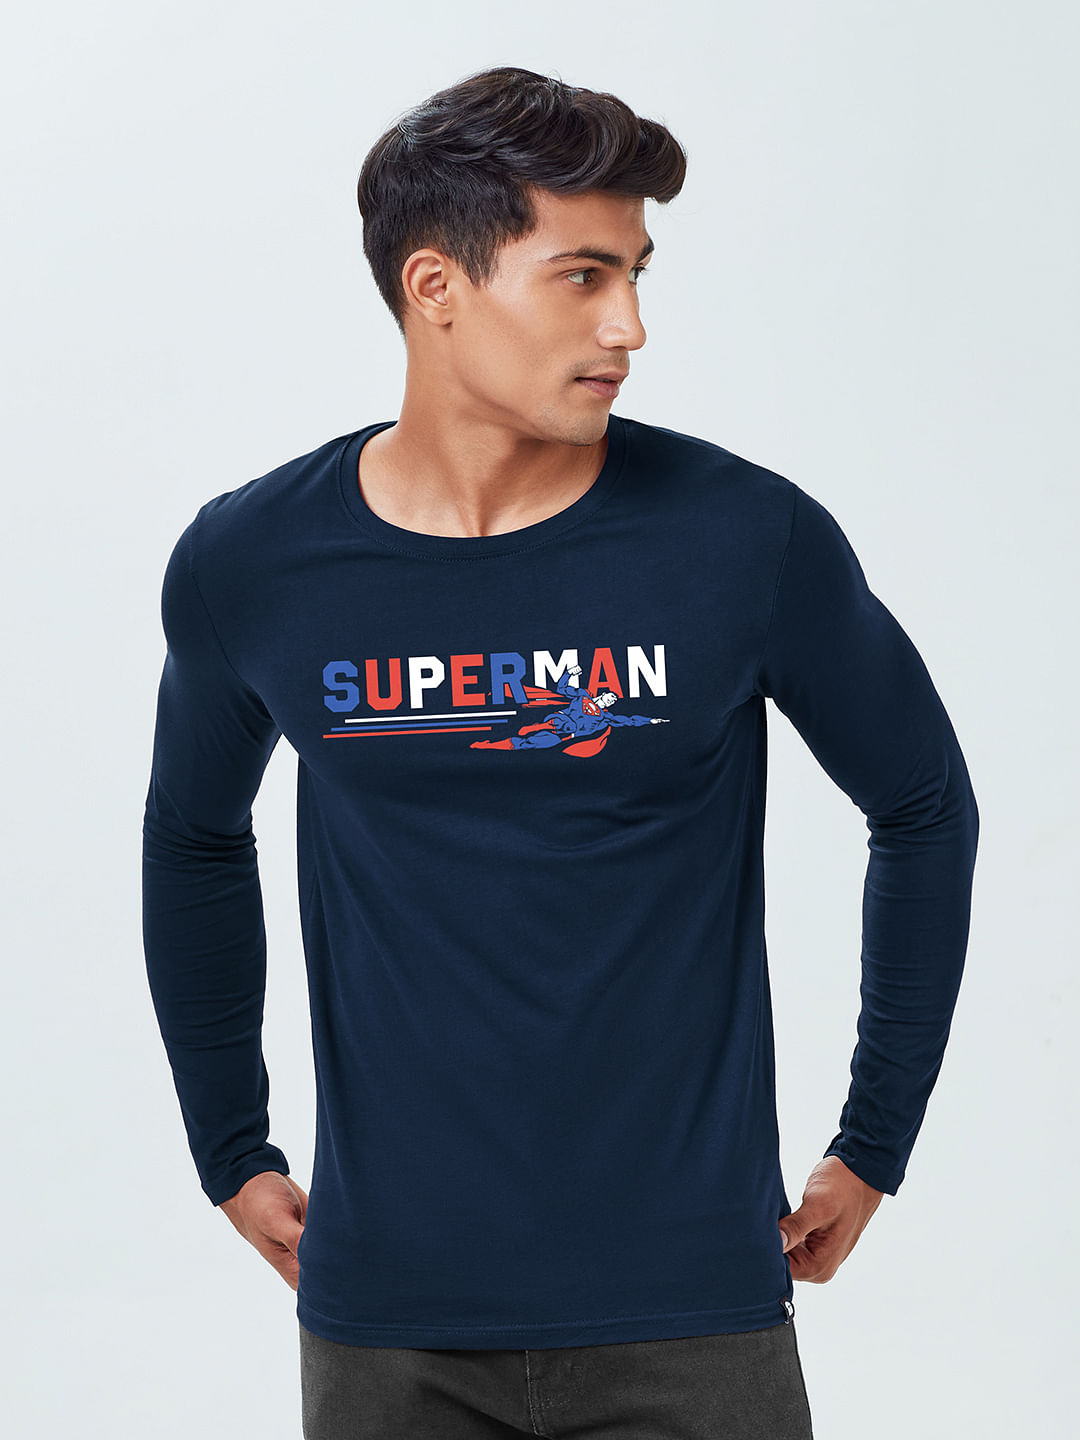 Buy Superman Flying High Men Full Sleeve T-Shirts Online